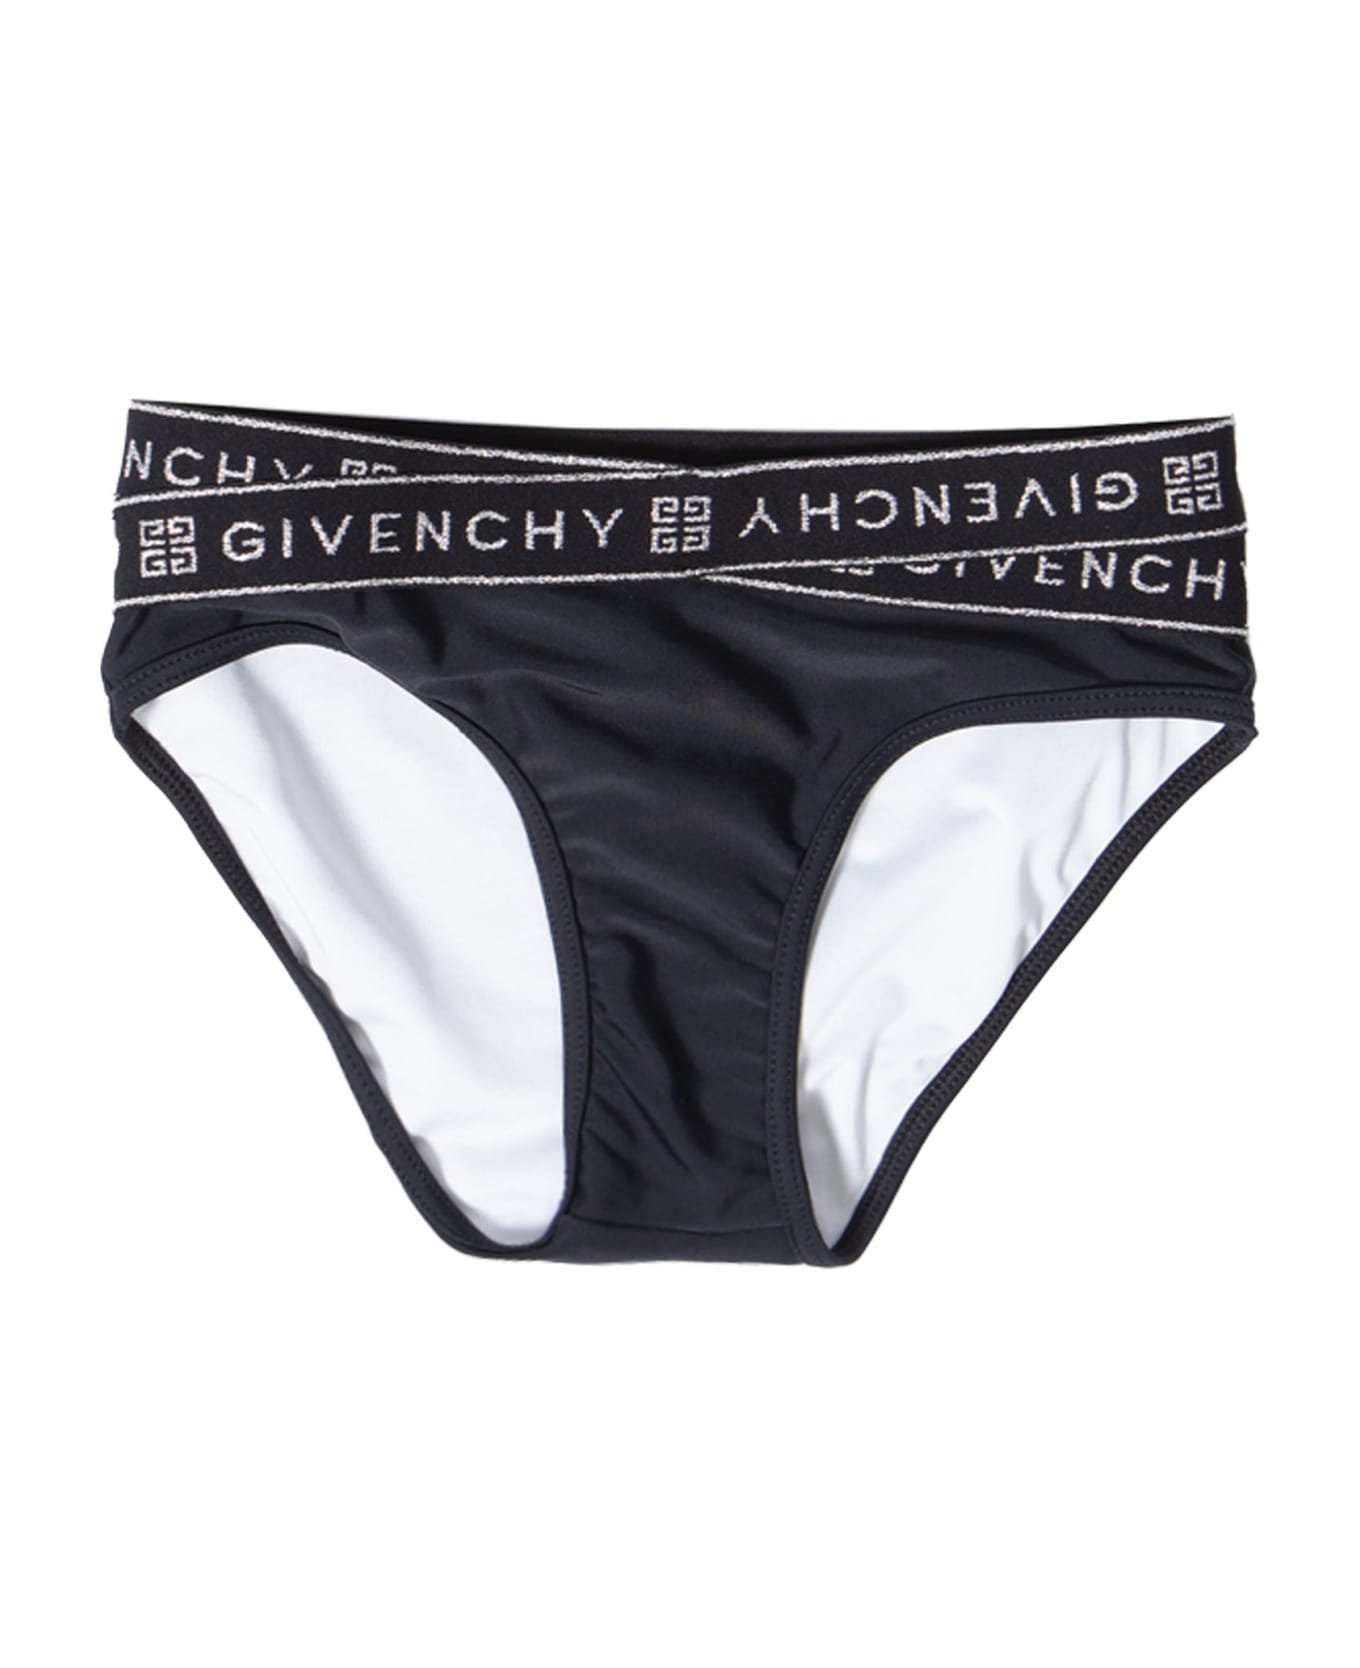 Givenchy Swimwear - Back